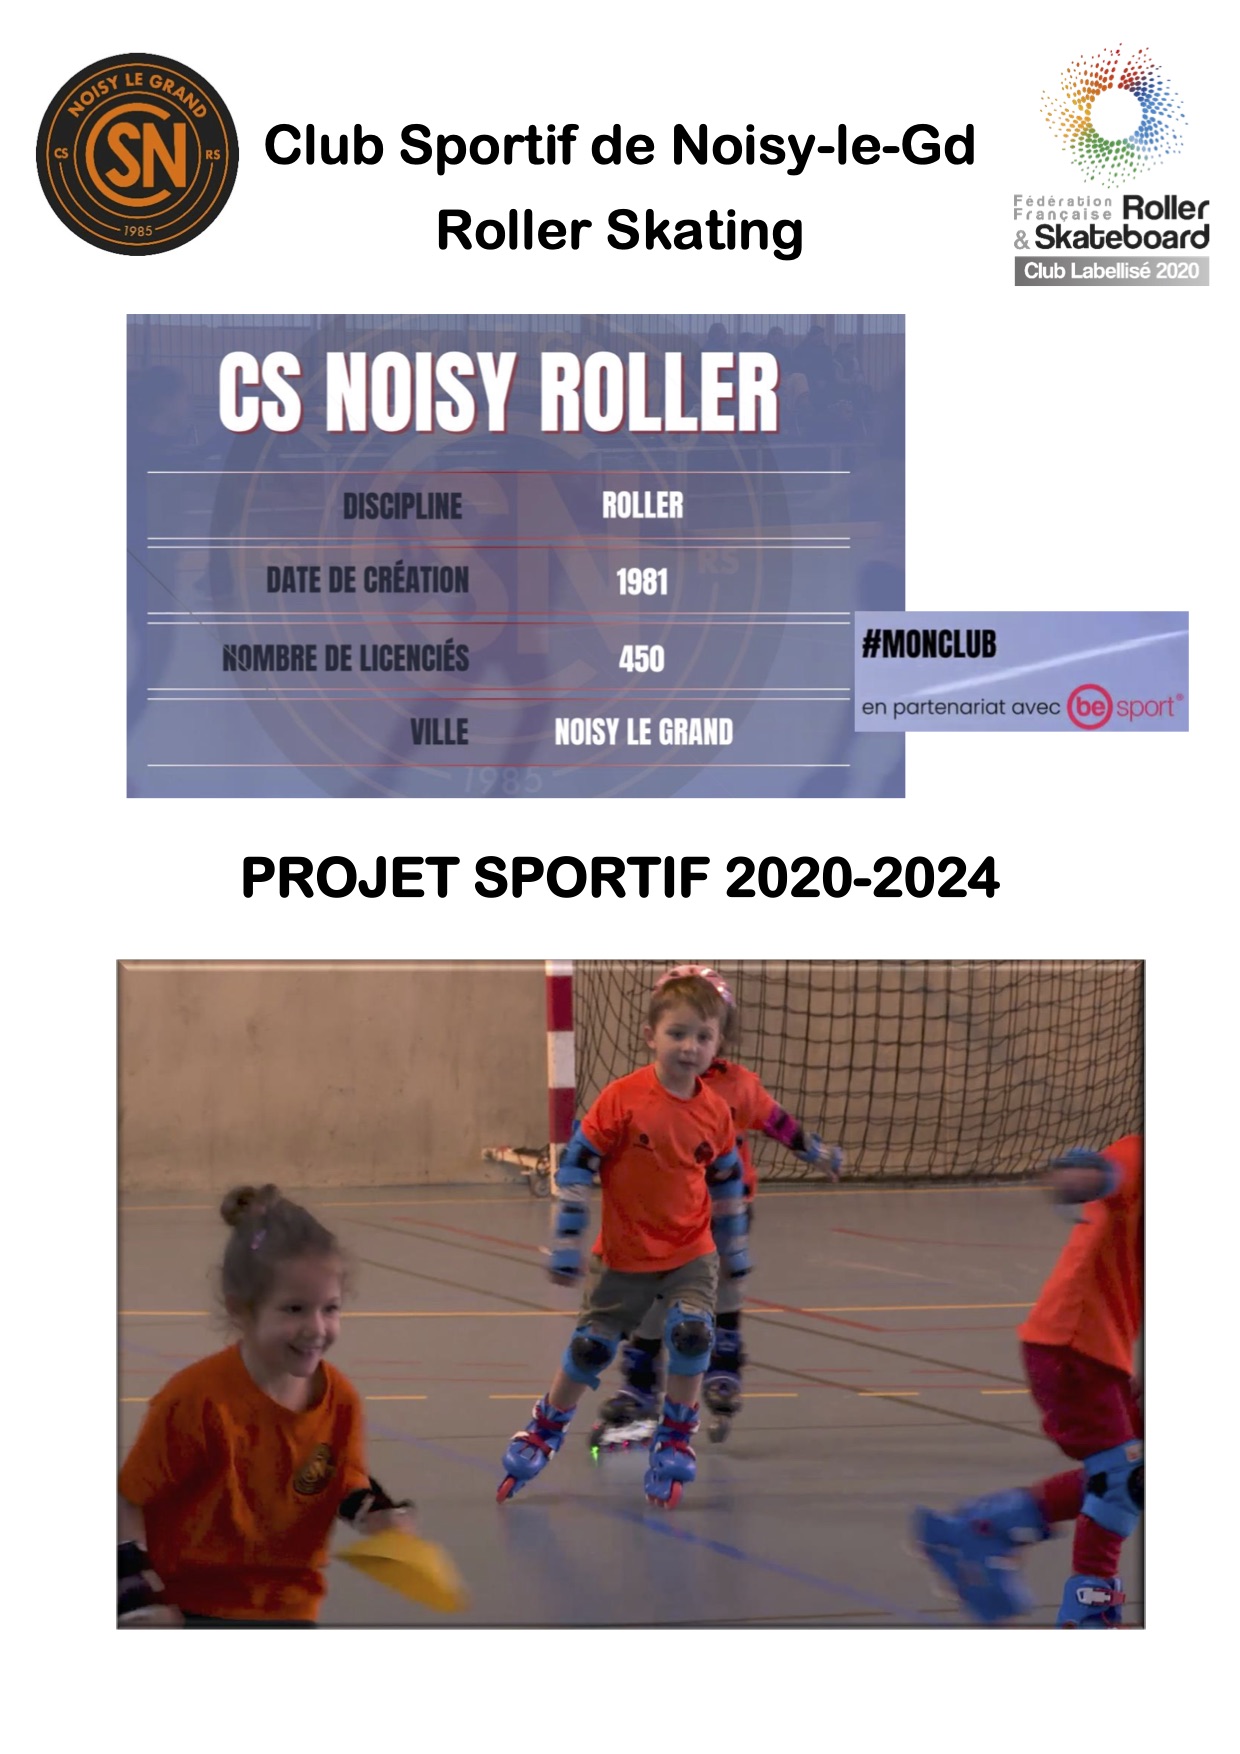 https://www.noisyroller.fr/wp-content/uploads/2020/11/Projet-sportif-CSNRS-2020-2024.jpg